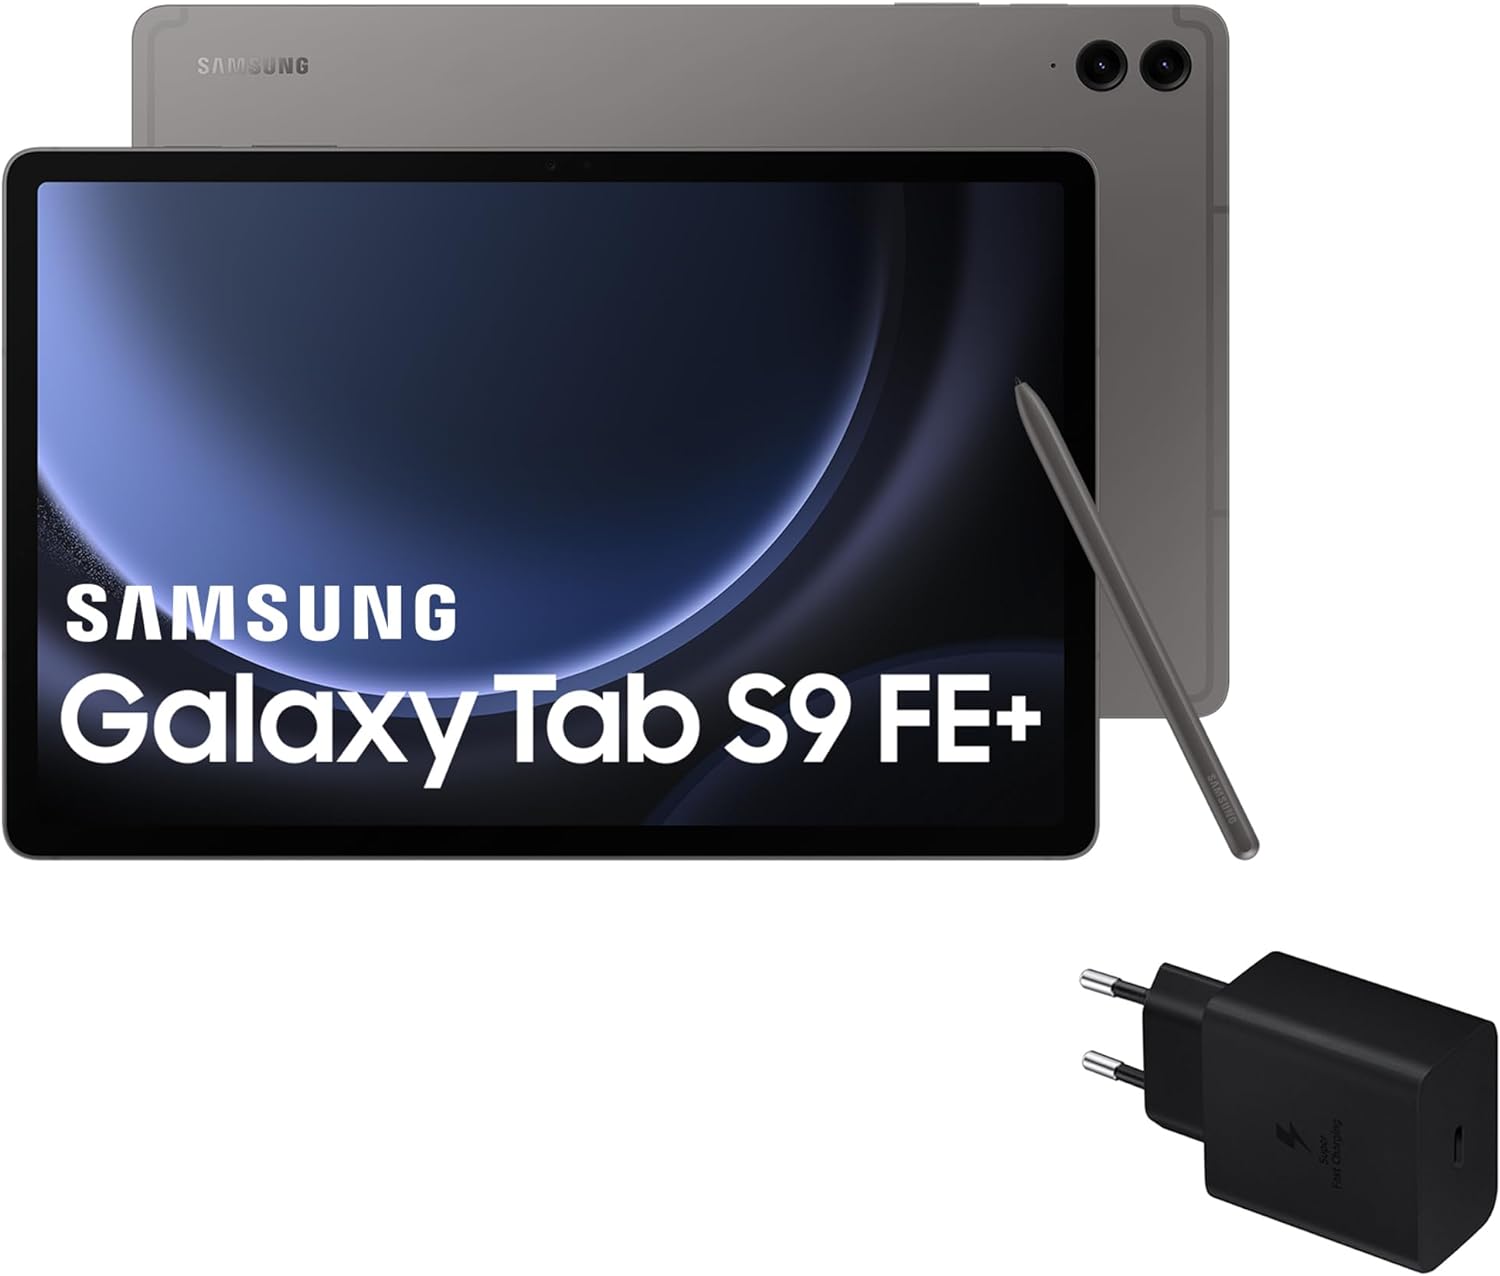 Samsung Galaxy Tab S9 FE+ vs Samsung Galaxy Tab S9 FE+